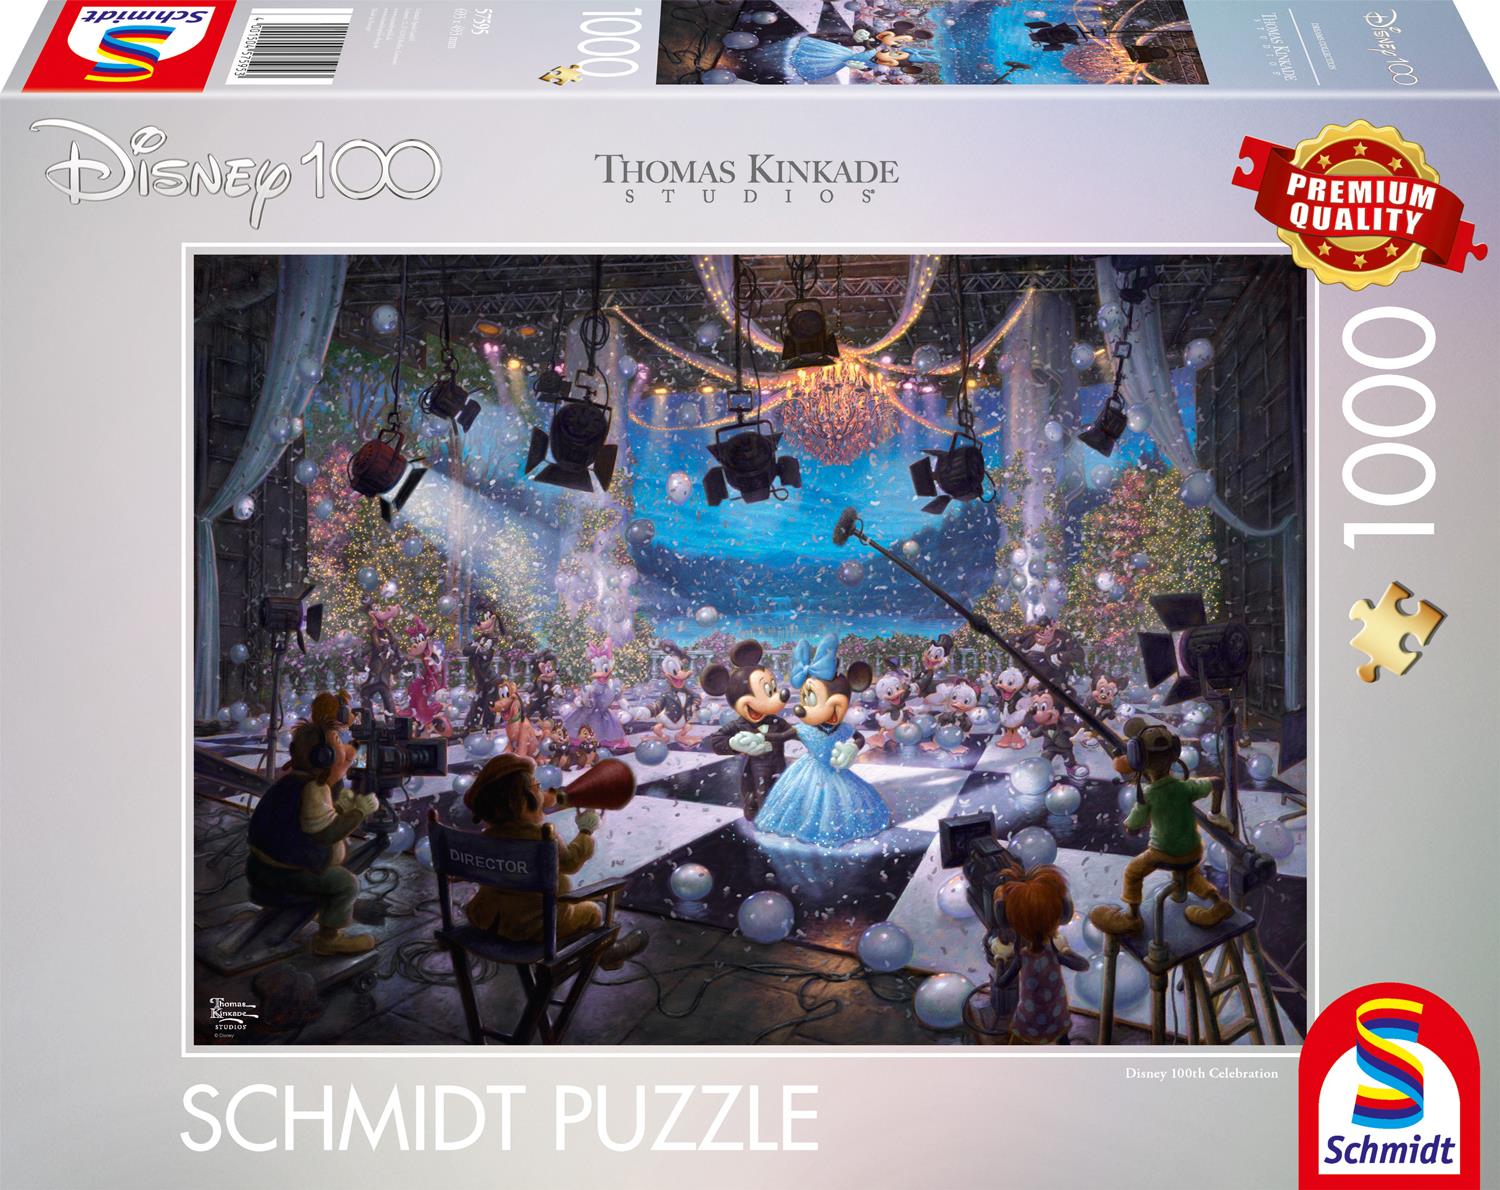 Schmidt Kinkade 100 Years of Disney Mickey and Minnie Jigsaw Puzzle (1000 Pieces) DAMAGED BOX